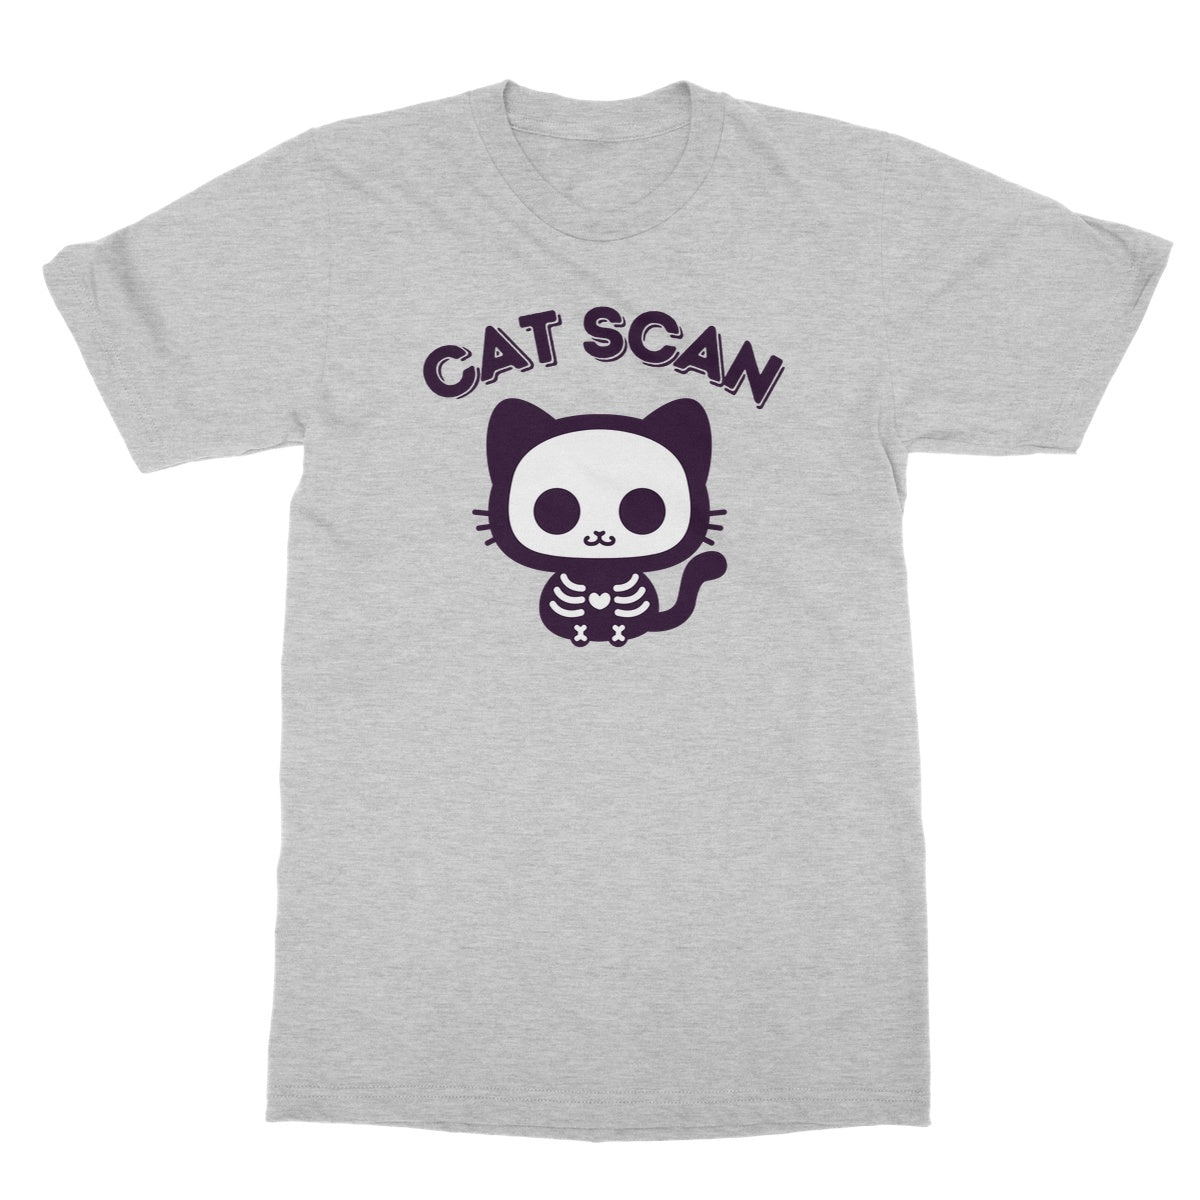 cat scan t shirt grey